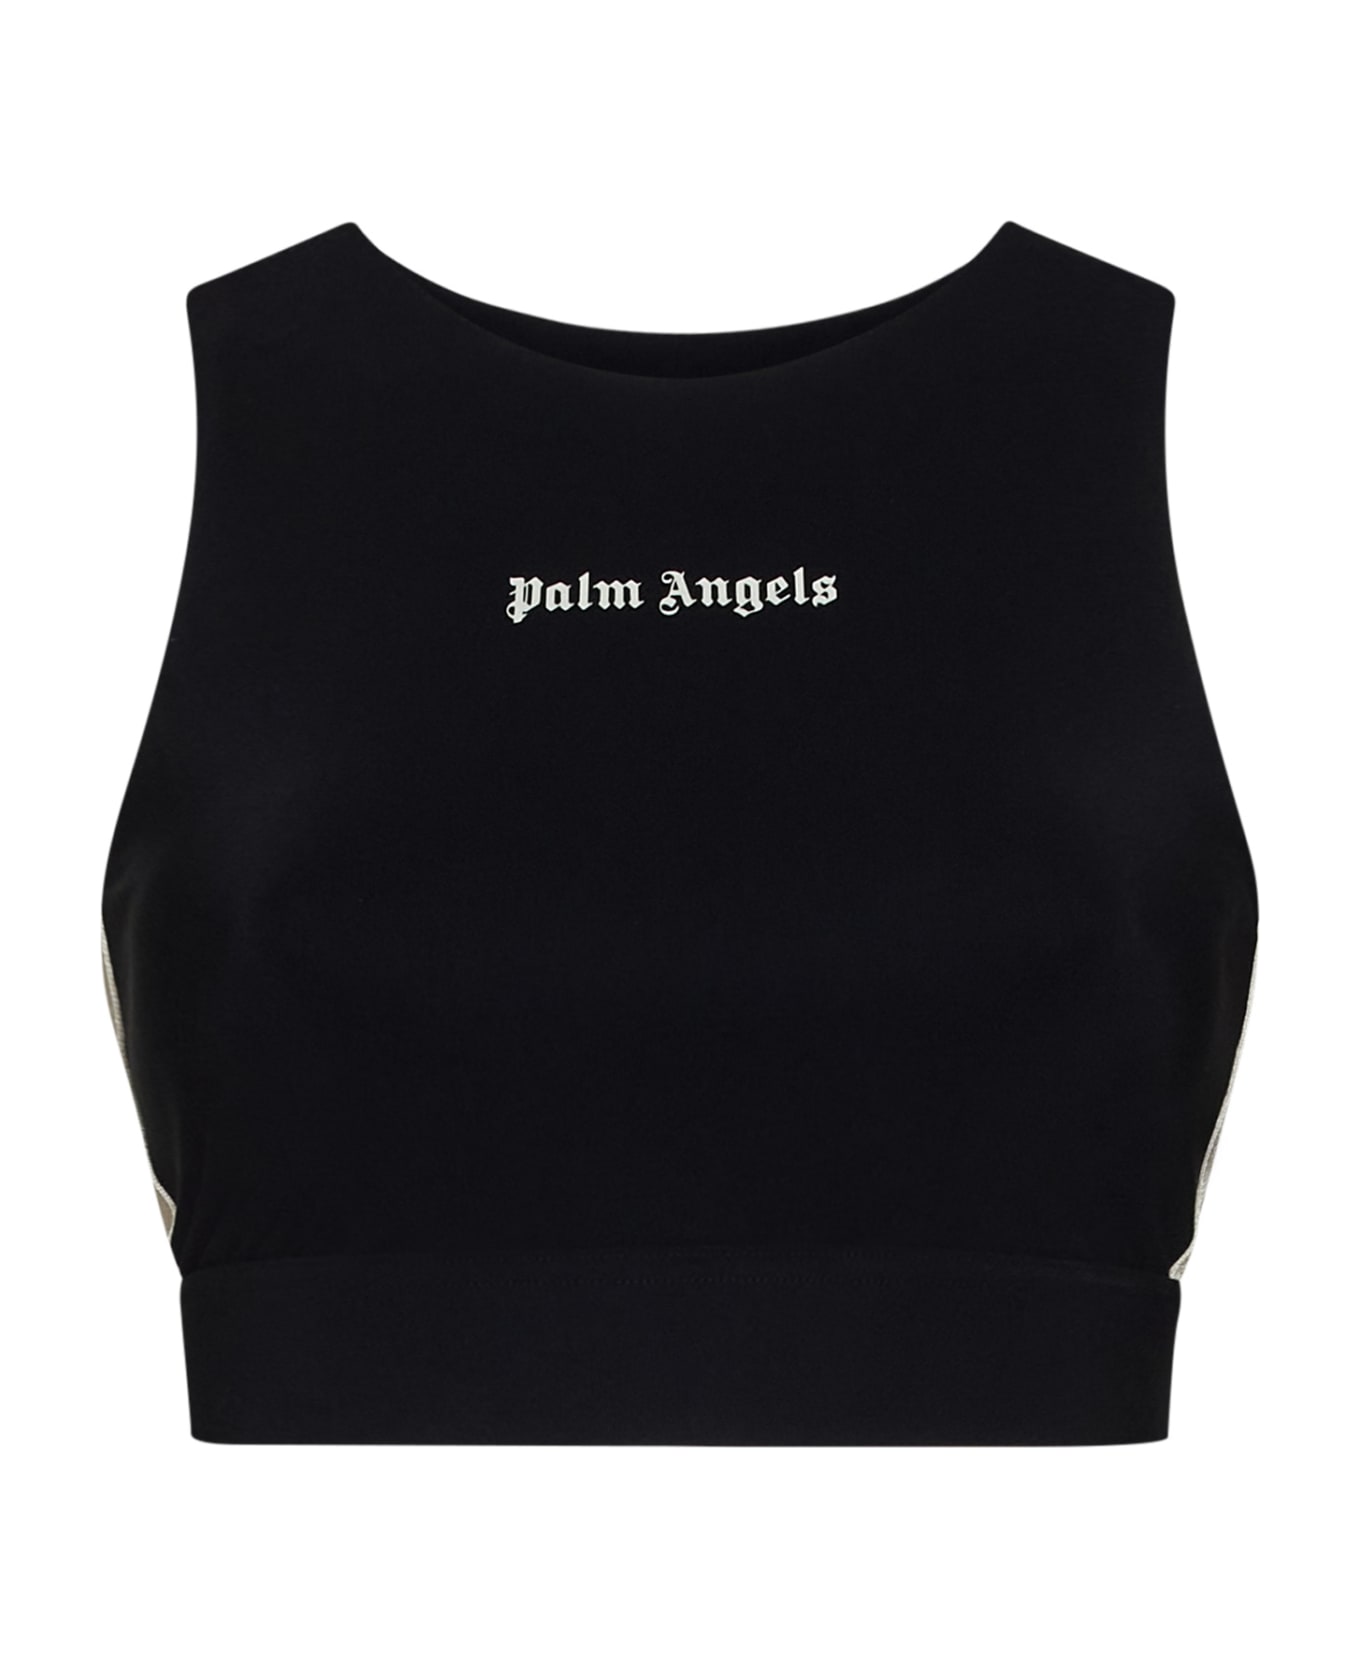 Palm Angels 'b Track Training' Sports Top - Black off white